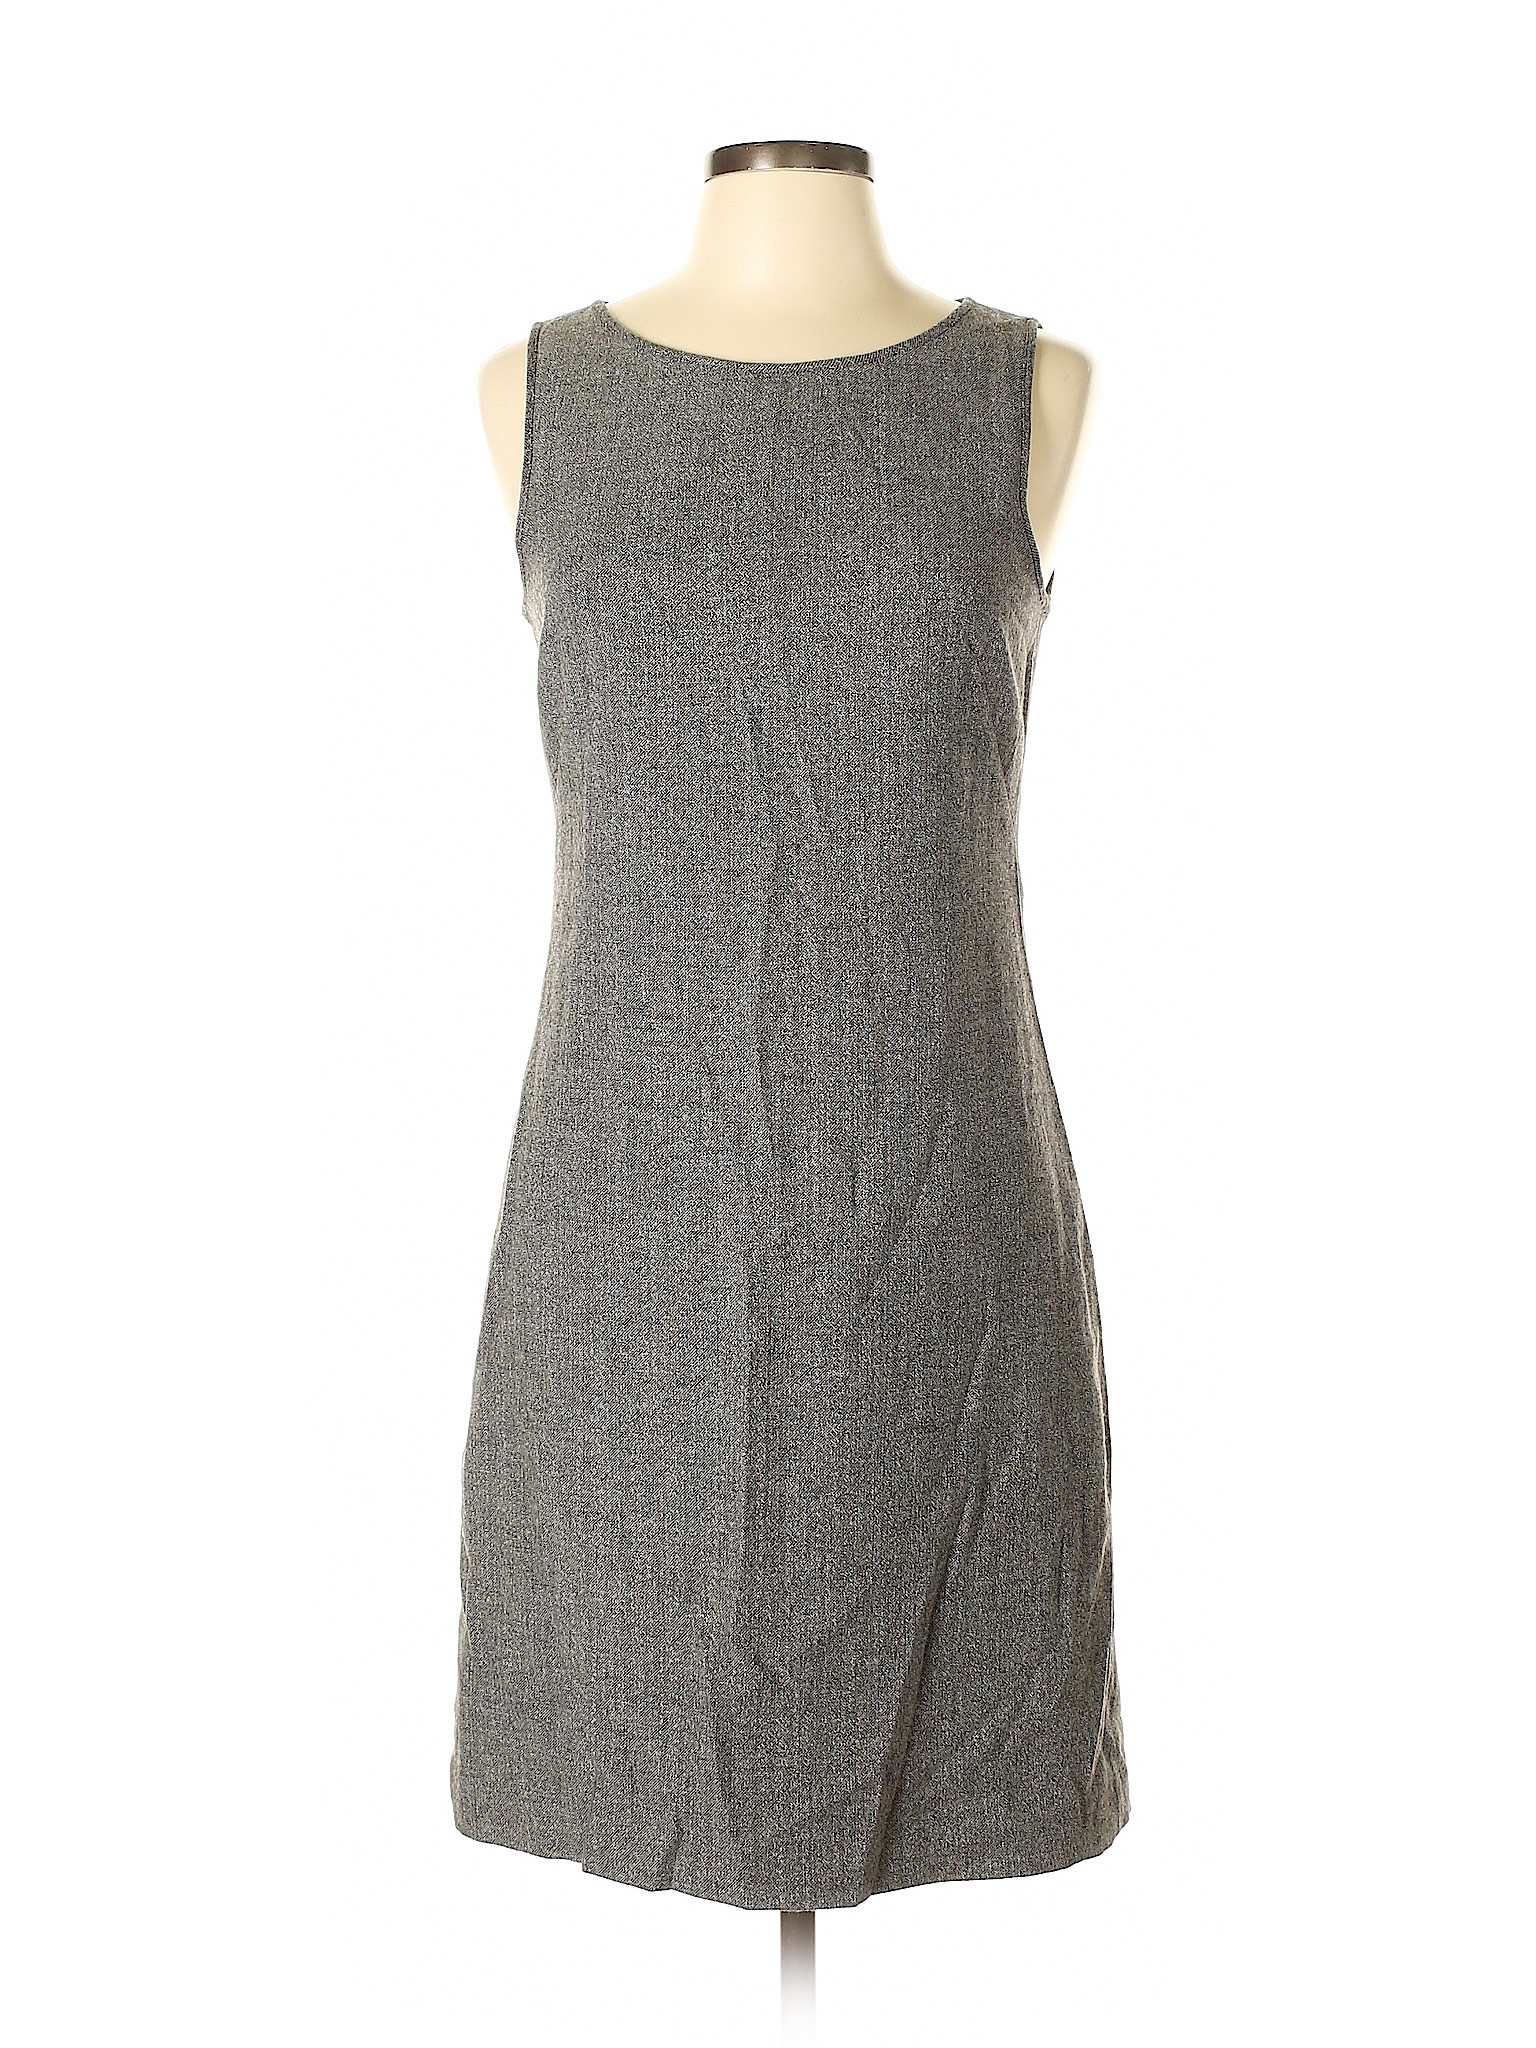 Theory Women Gray Casual Dress 10 | eBay